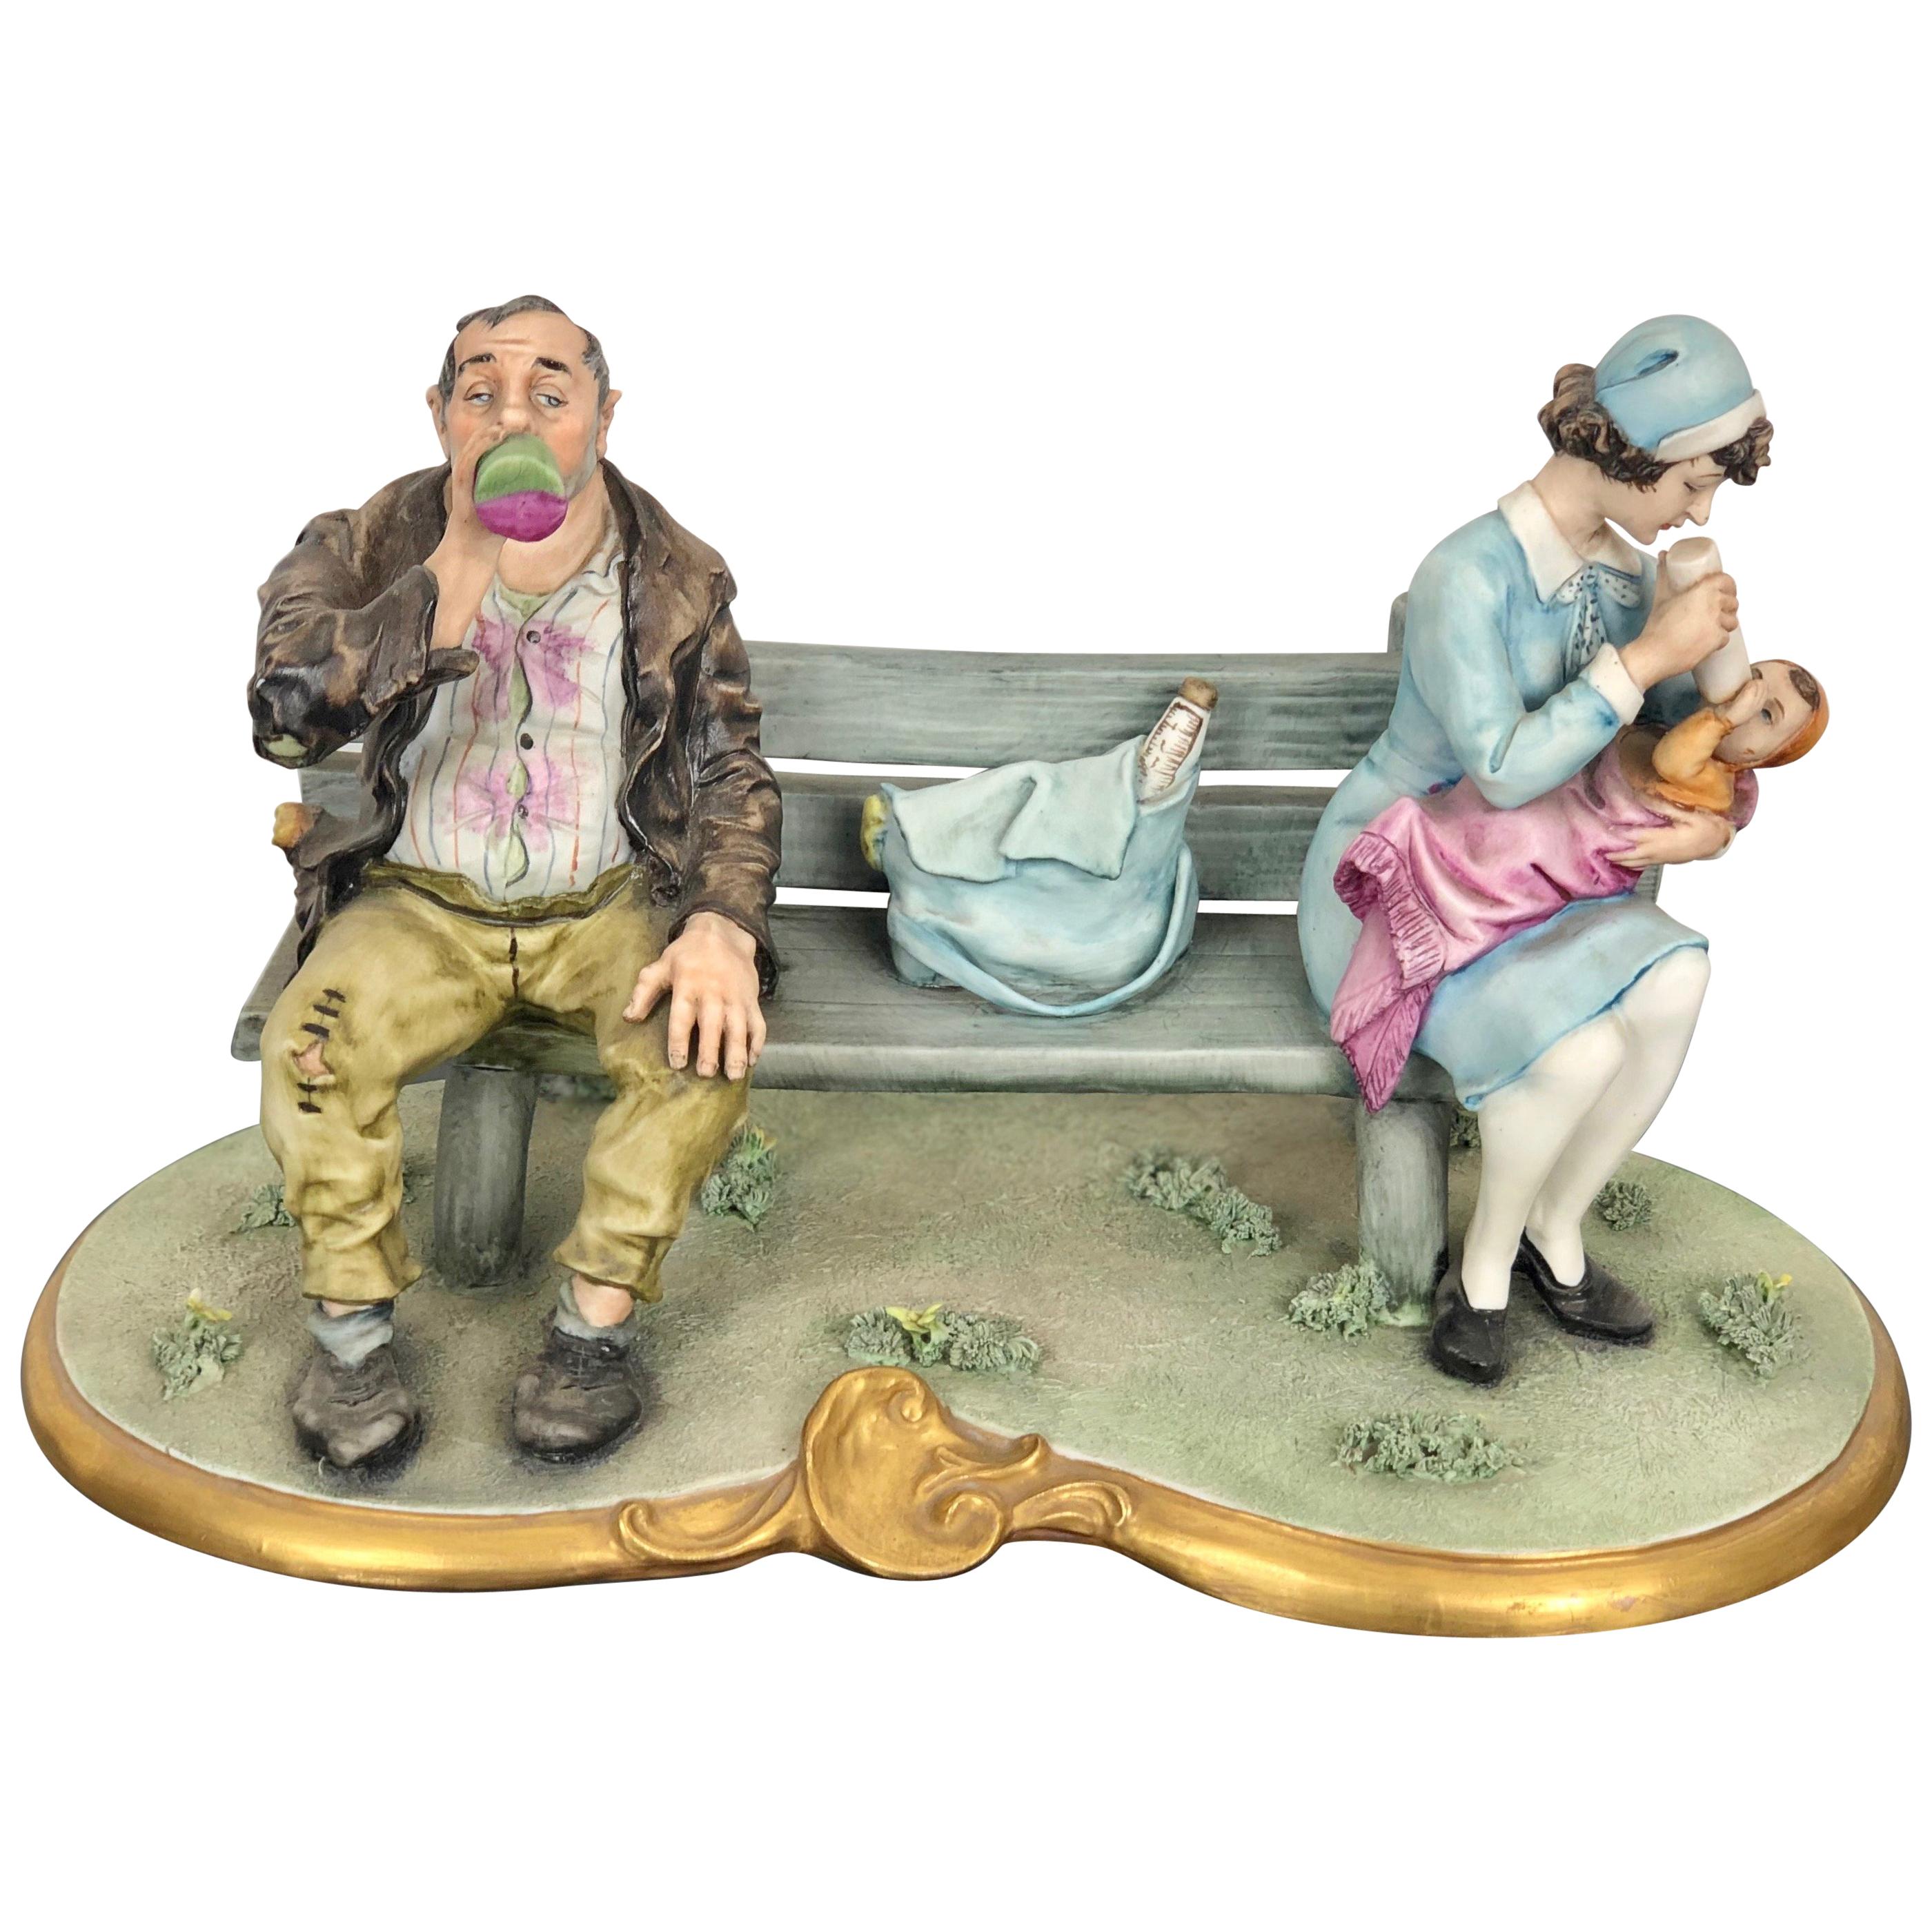 Capodimonte Porcelain Sculpture Tramp and a Nanny on a Bench, De Palmas, Italy